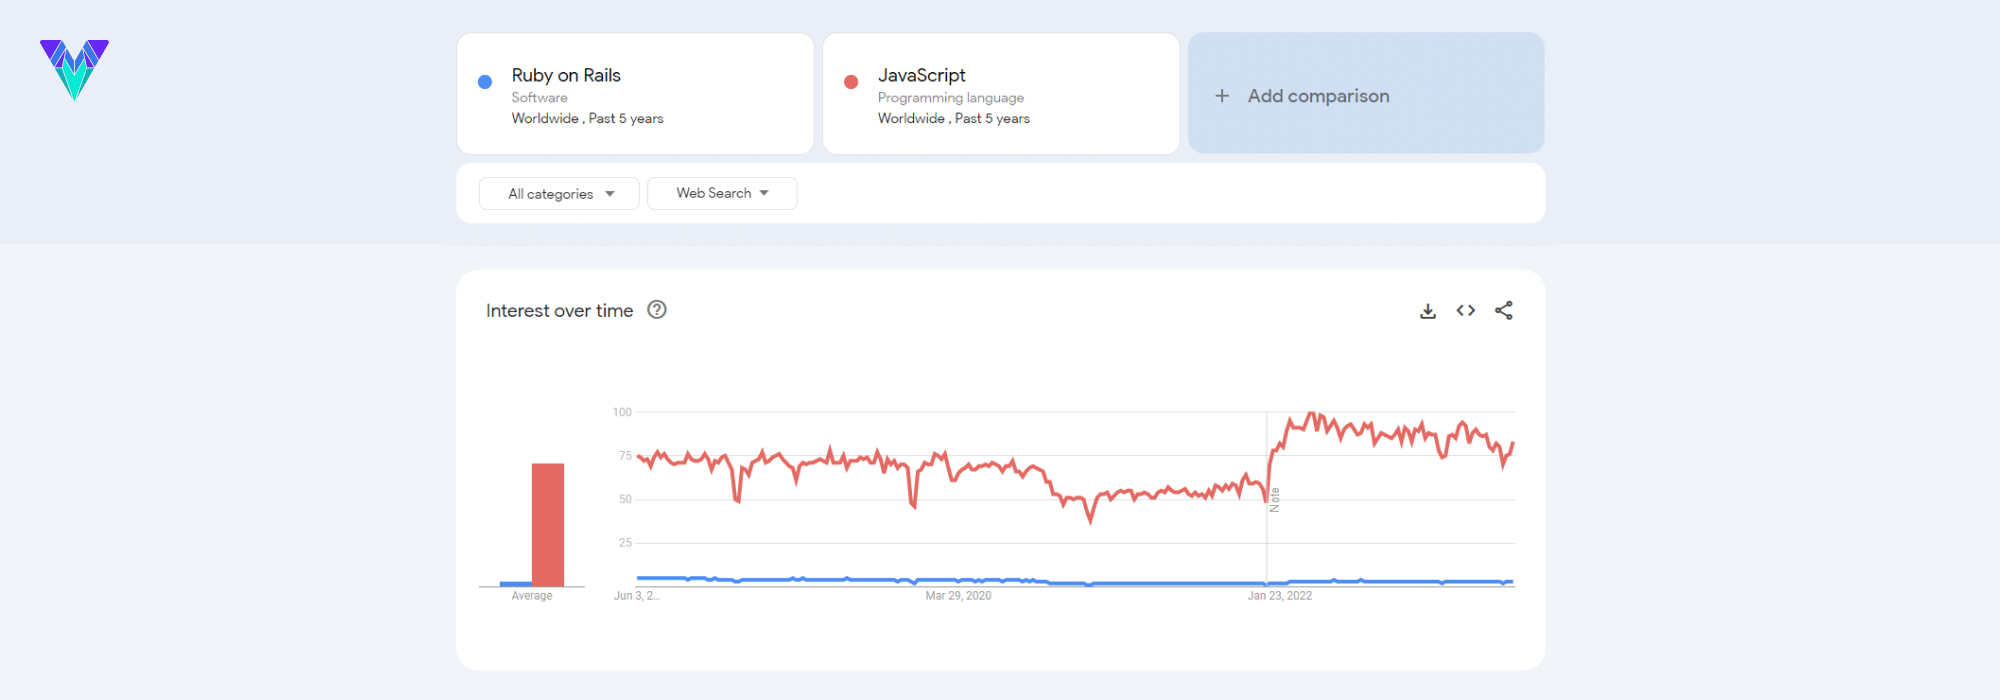 Ruby on Rails Vs JavaScript google trends